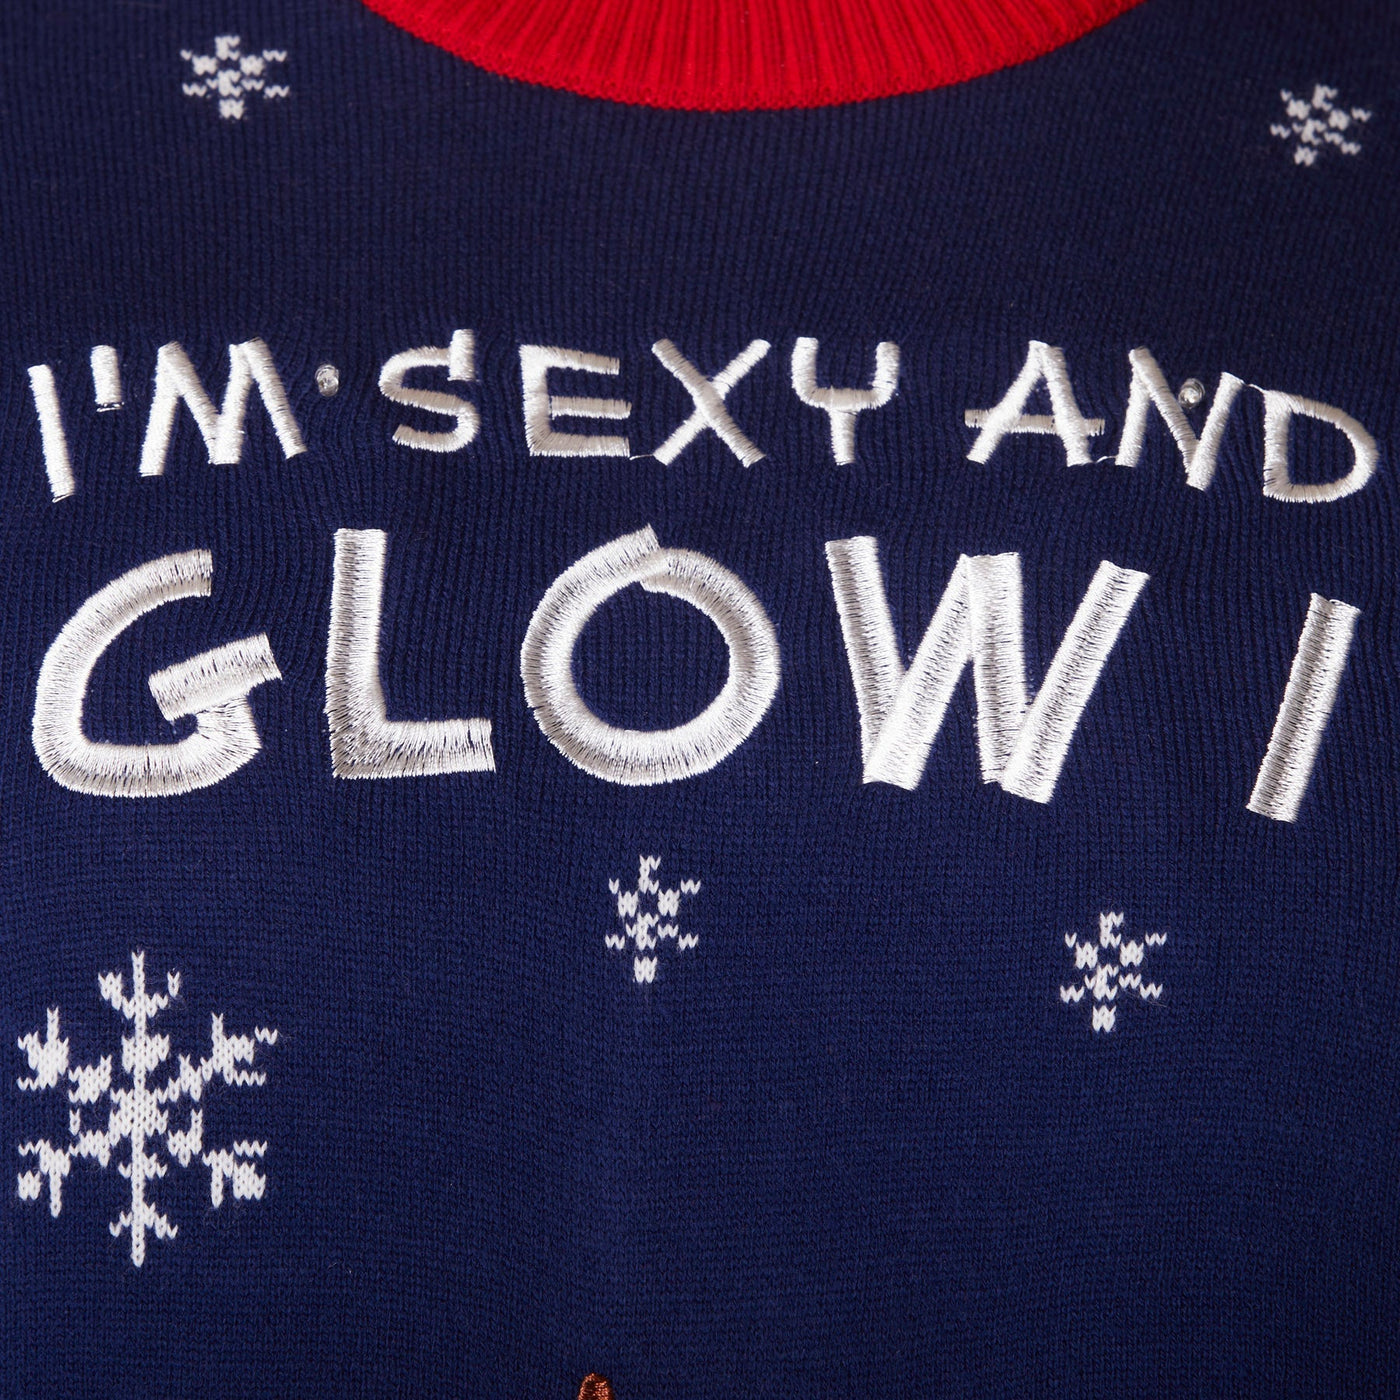 I'm Sexy And I Glow It Weihnachtspullover Herren